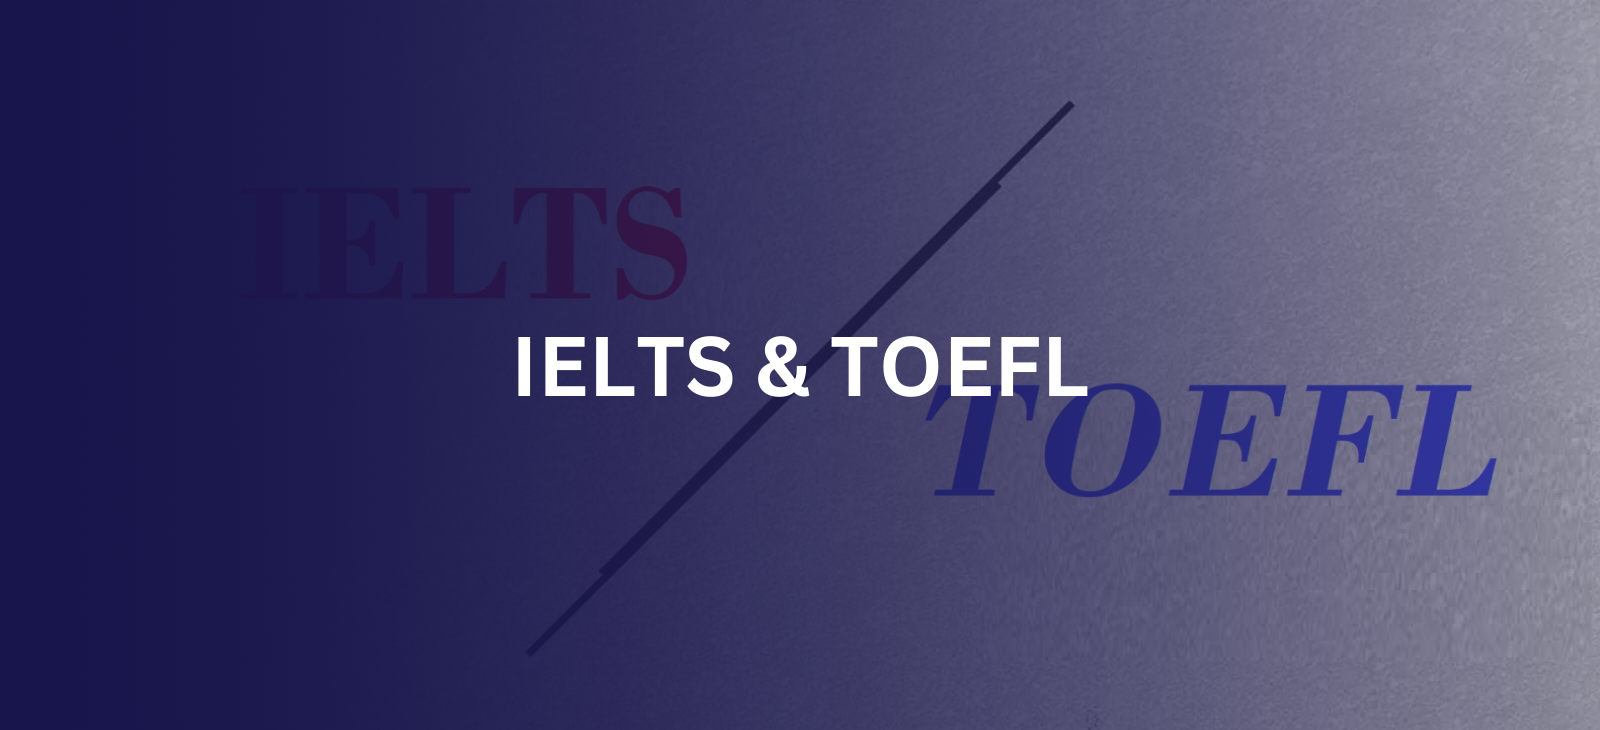 One Hub Study's IELTS & TOEFL Preparation Services